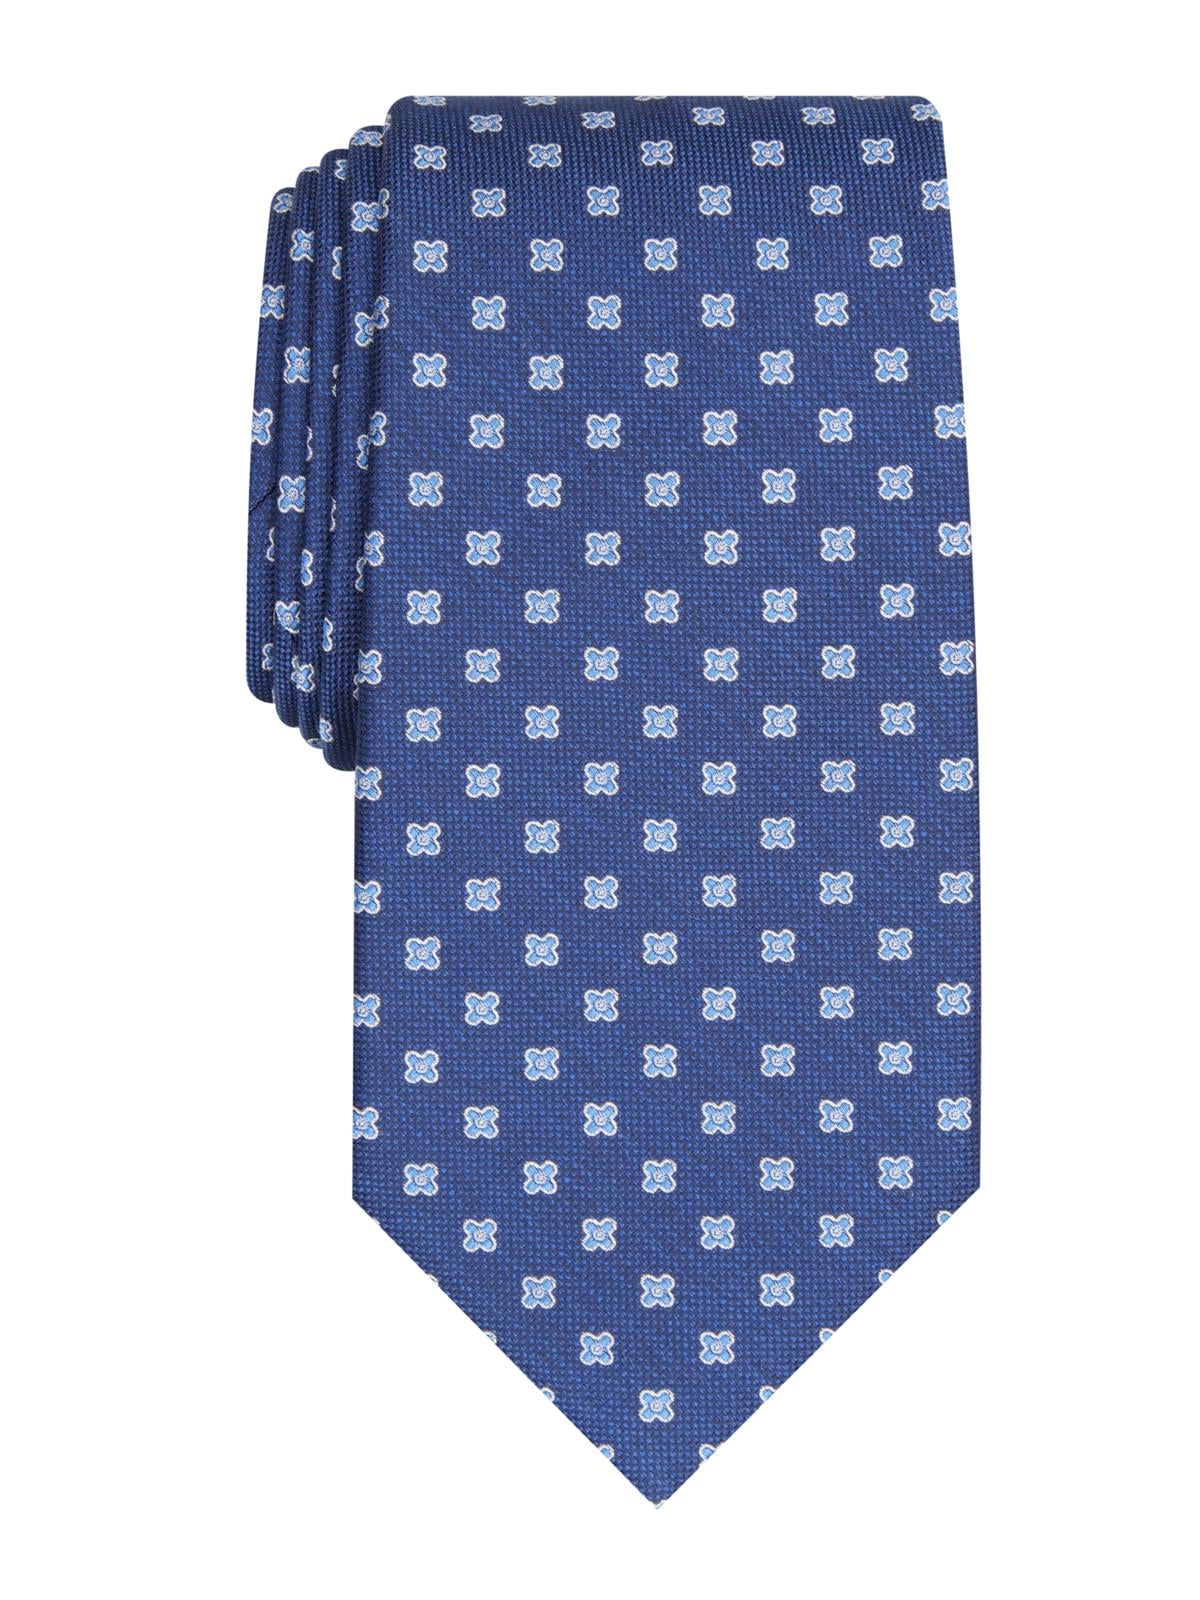 Details about   $95 Club Room Mens White Navy Blue Striped Neck Tie Casual Dress Necktie 59x3.25 